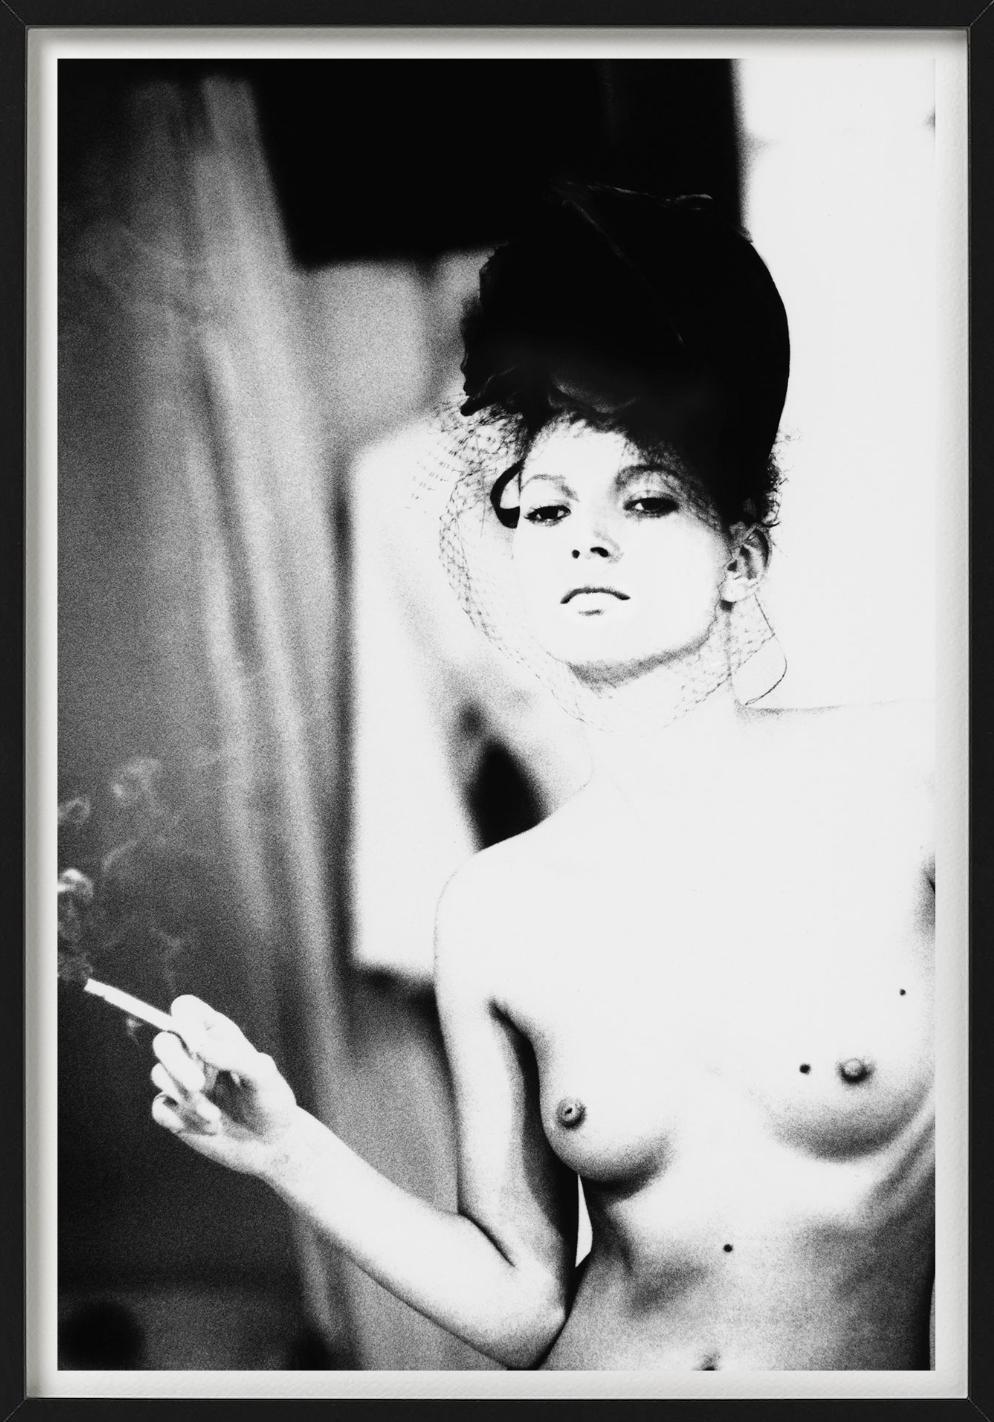 Kate Moss Smoking - b&w nude portrait of supermodel, fine art photography, 1996 - Gray Portrait Photograph by Ellen von Unwerth